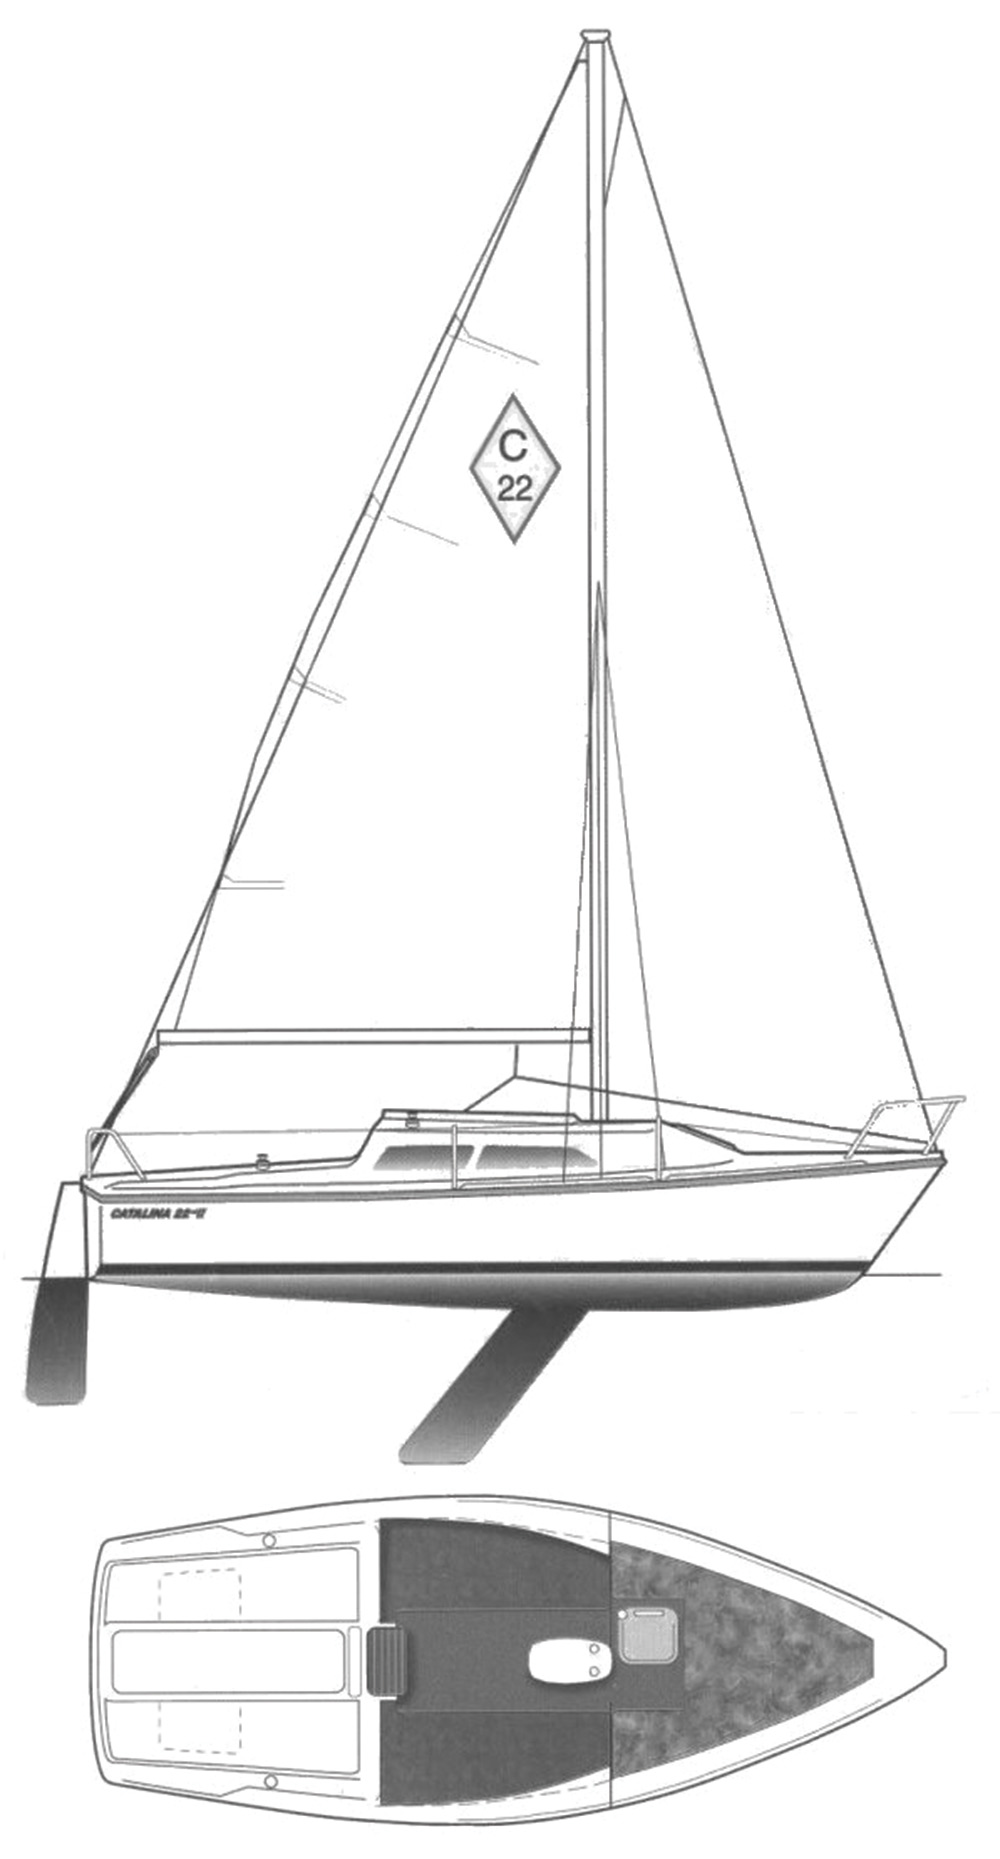 1975 22 ft catalina sailboat